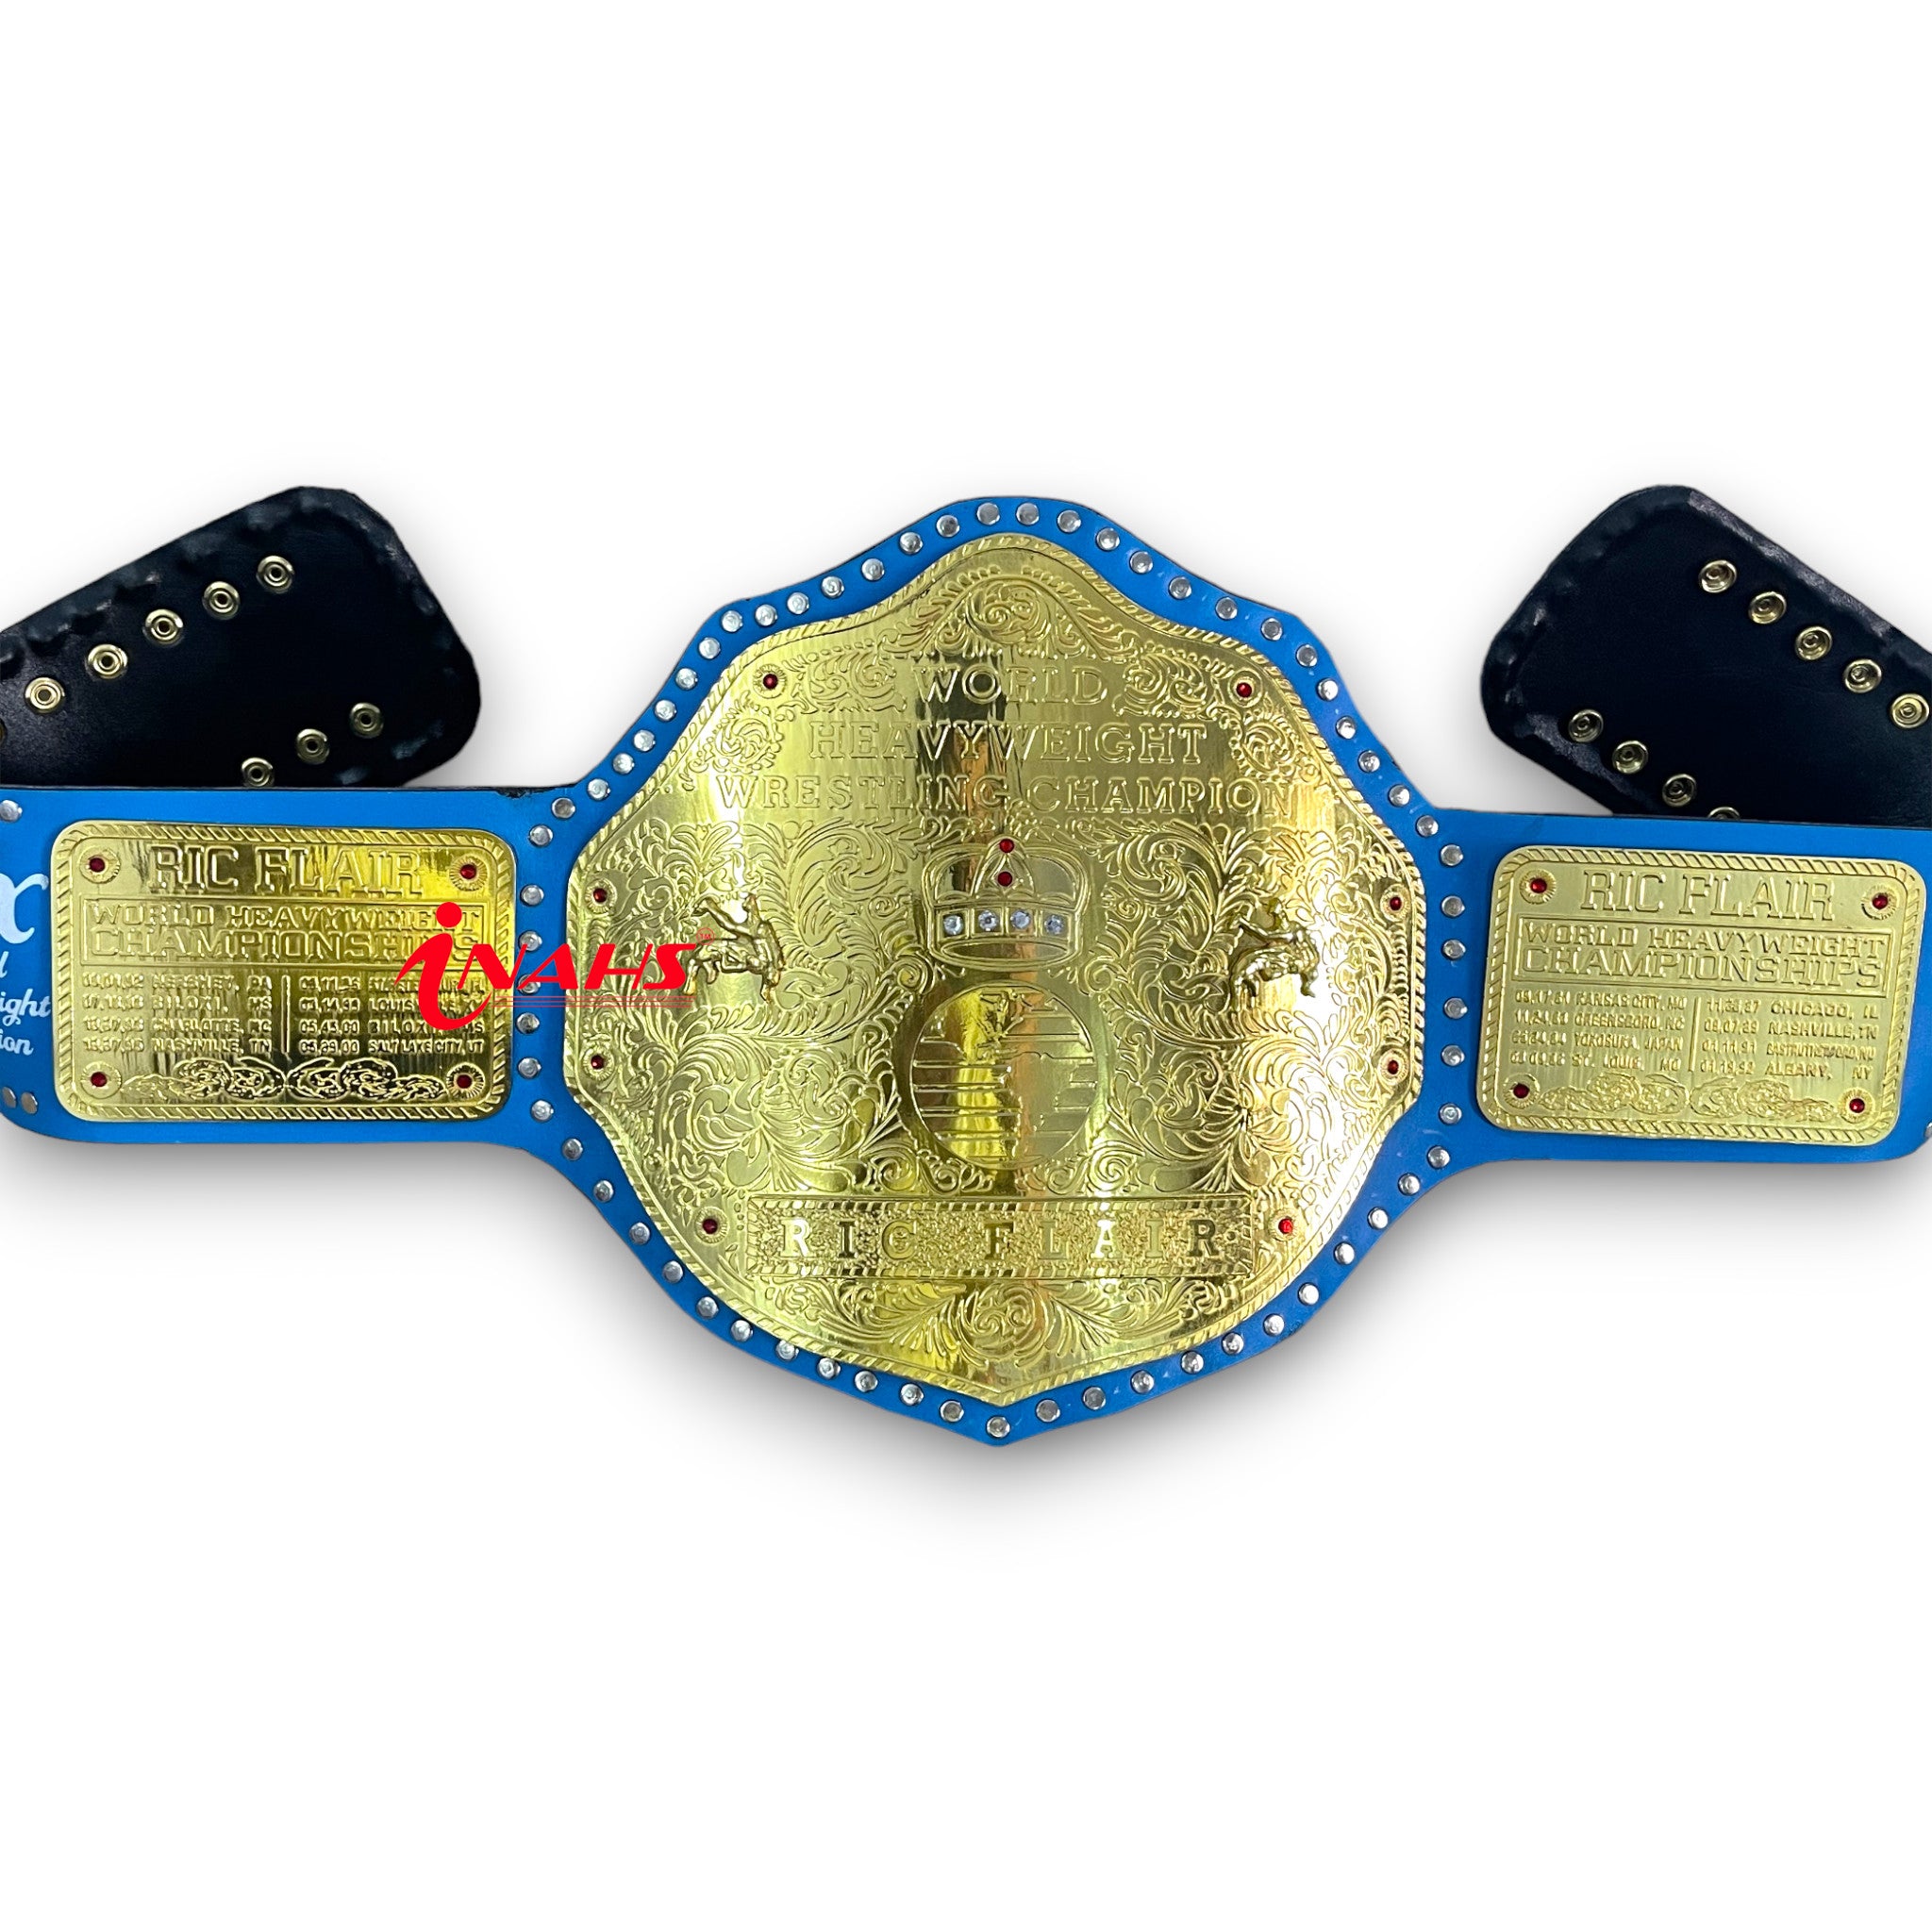 WCW Ric Flair Big Gold World Heavyweight Wrestling Championship Belt